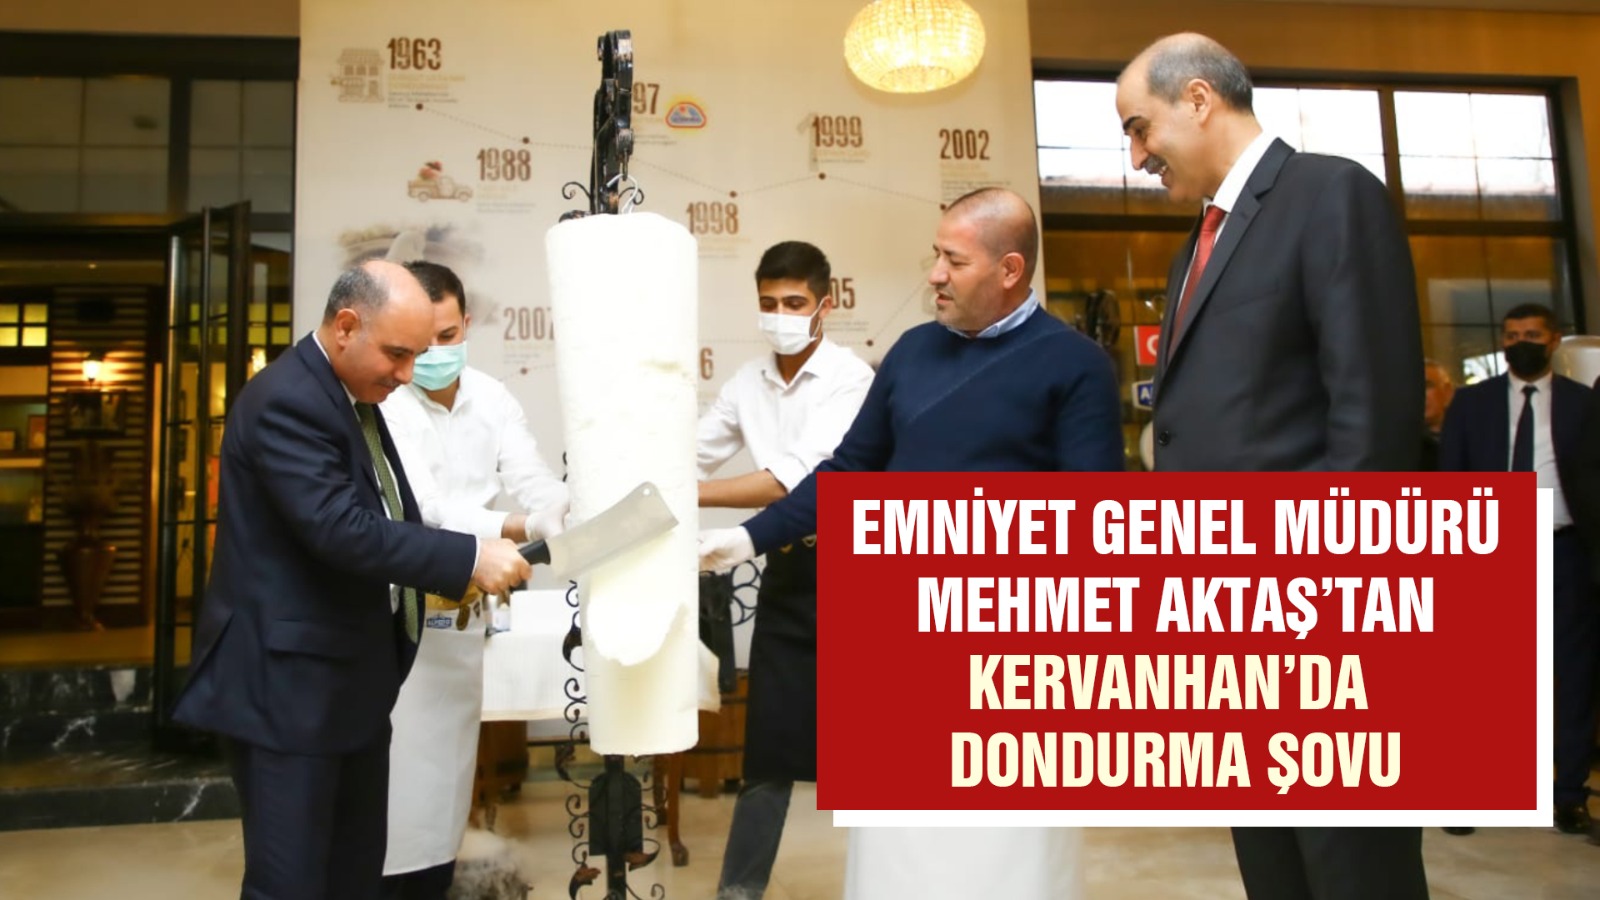 Emniyet Genel Müdürü Mehmet Aktaş’tan Kervanhan’da Dondurma Şovu